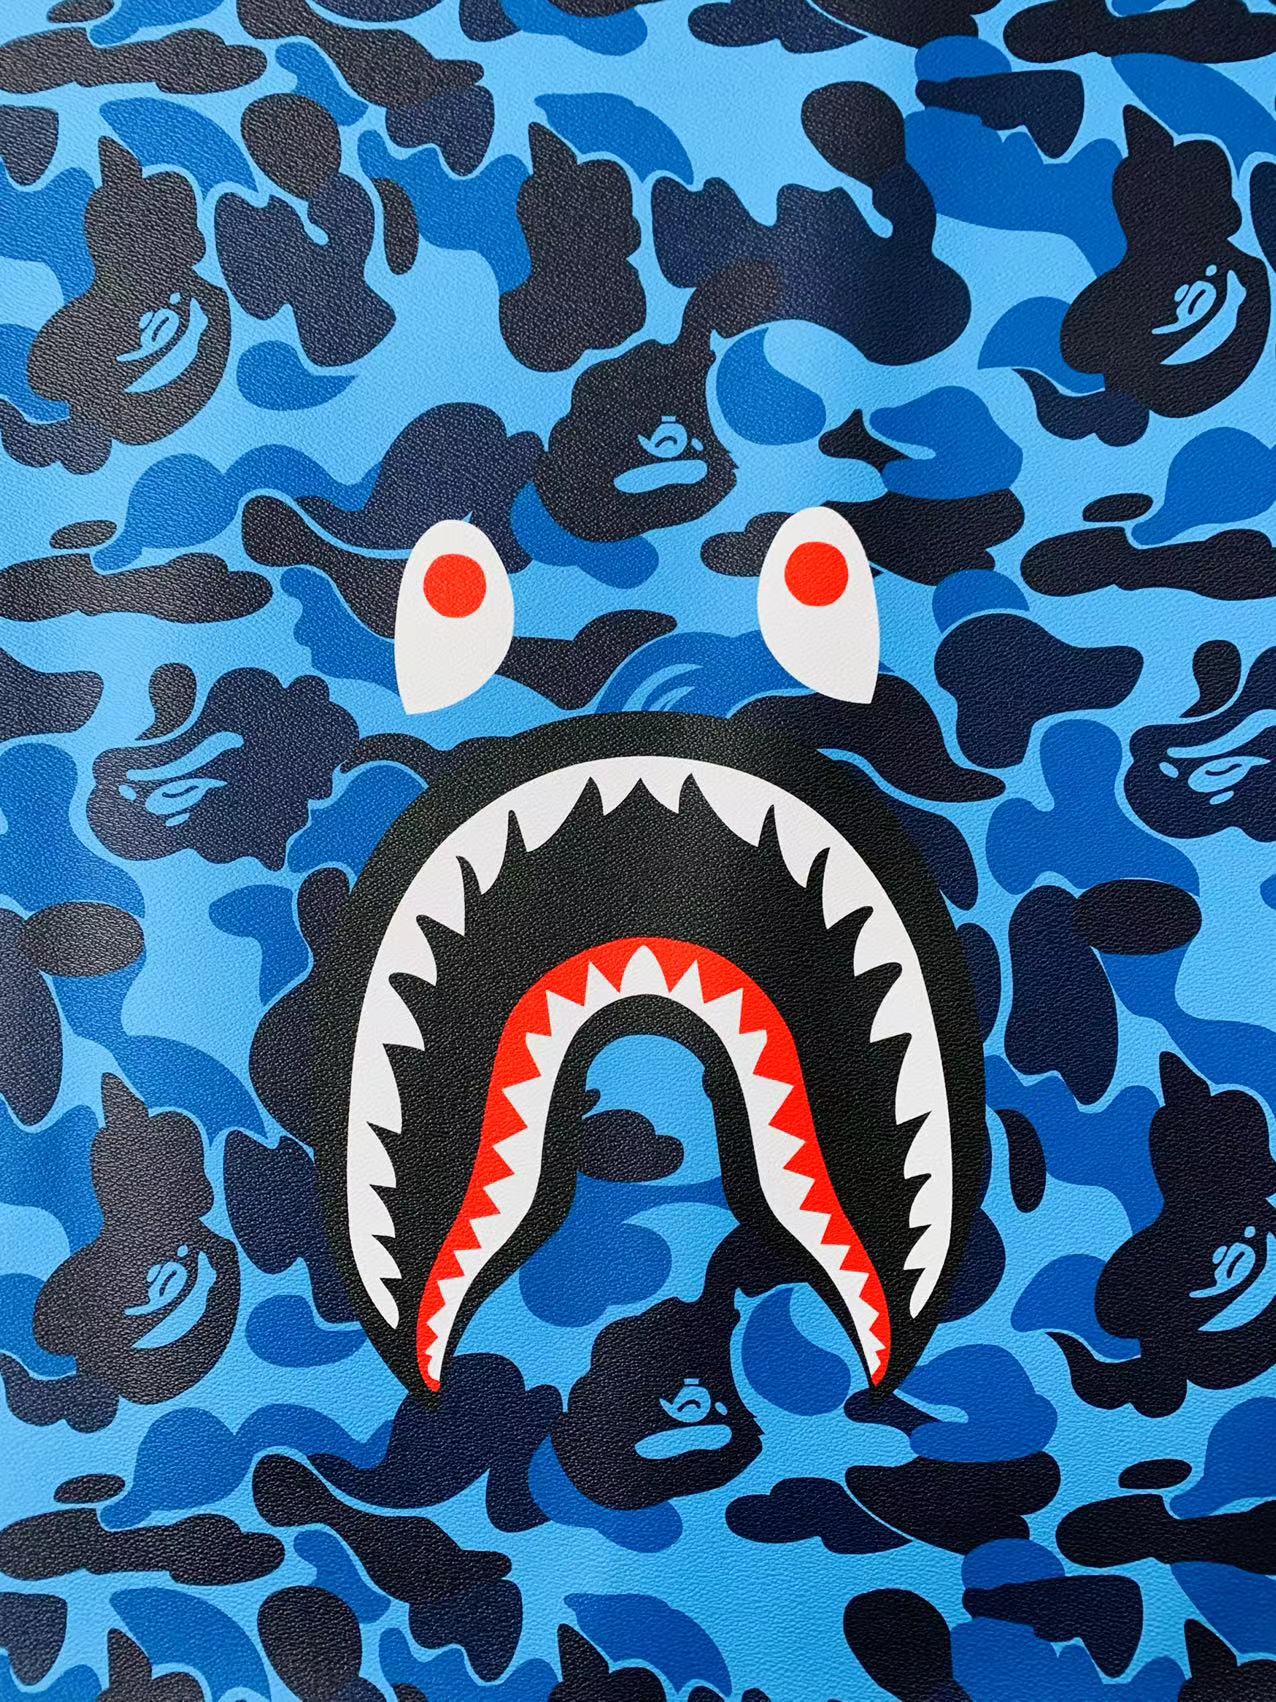 face shark bape | Drawstring Bag